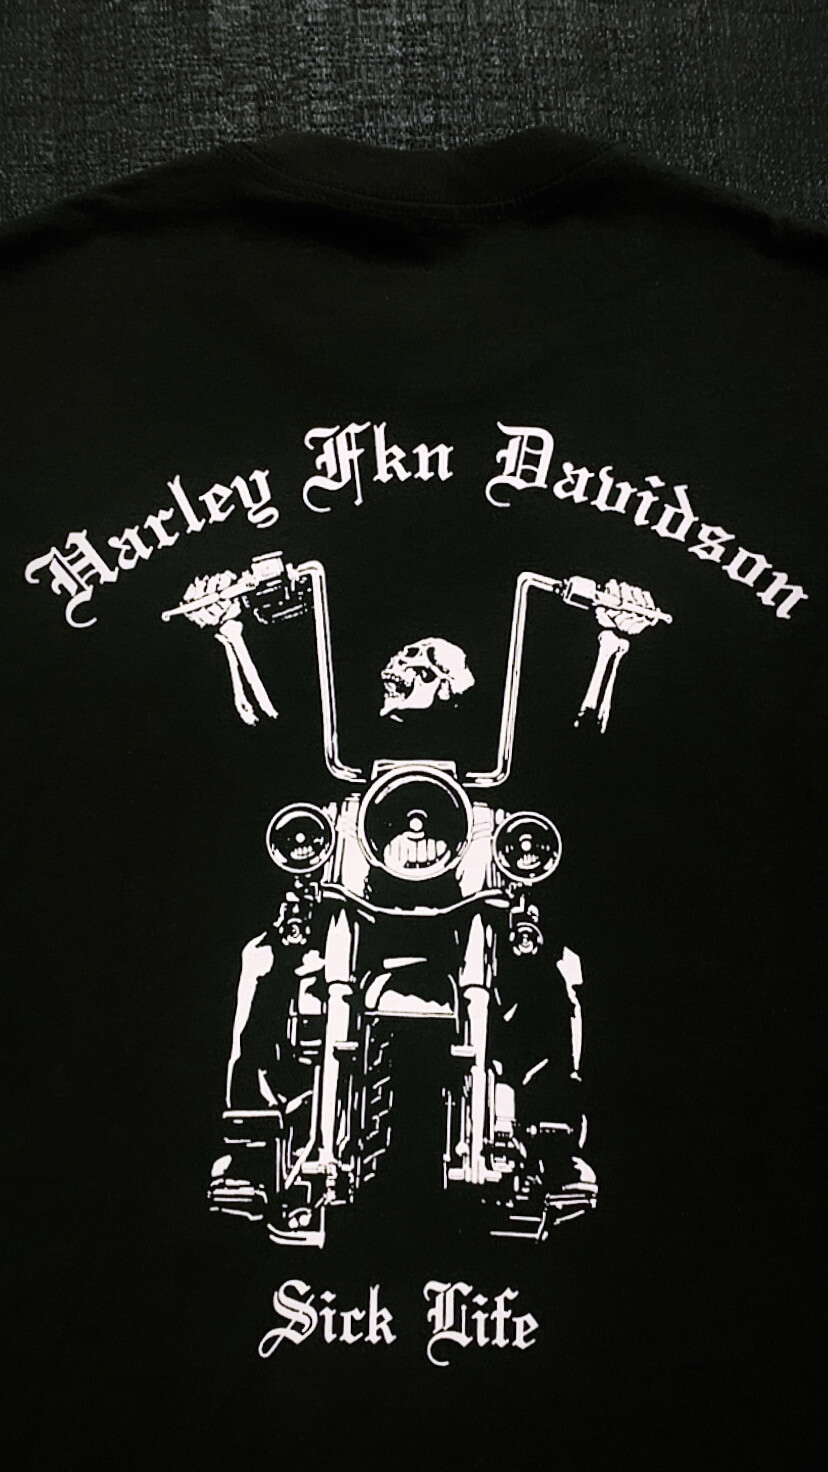 Harley FKN Davidson